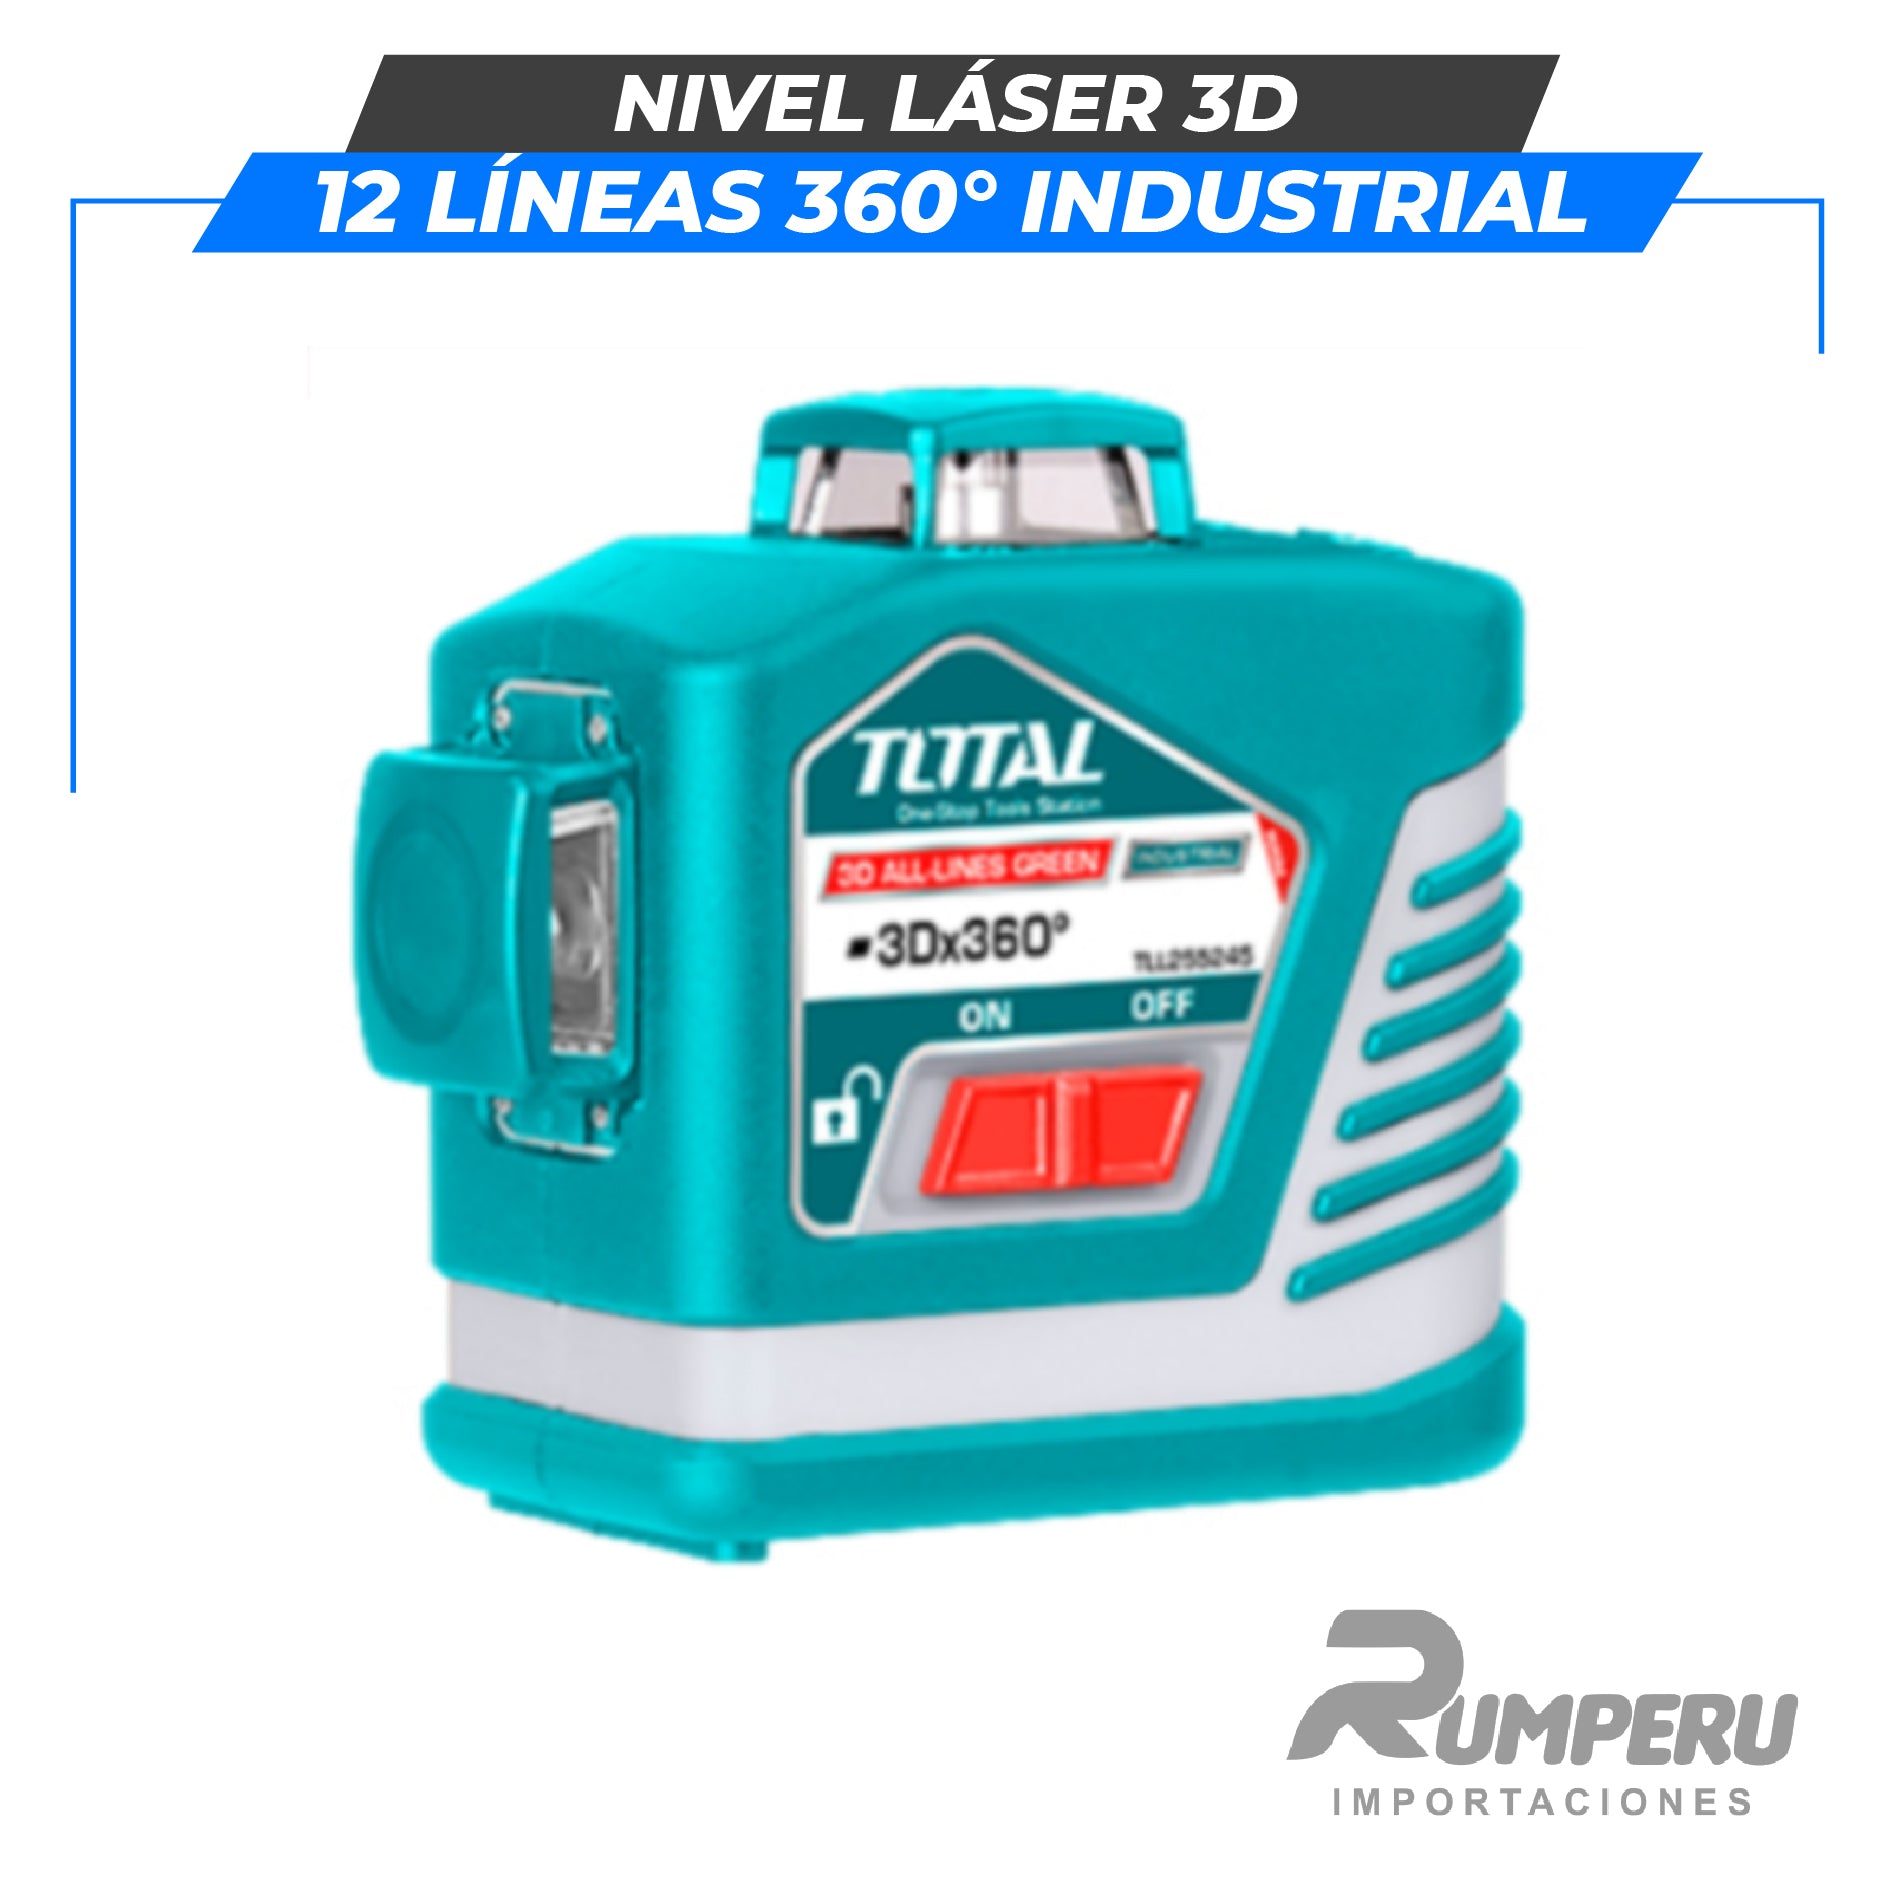 Nivel Laser 3D 12 lineas 360° INDUSTRIAL